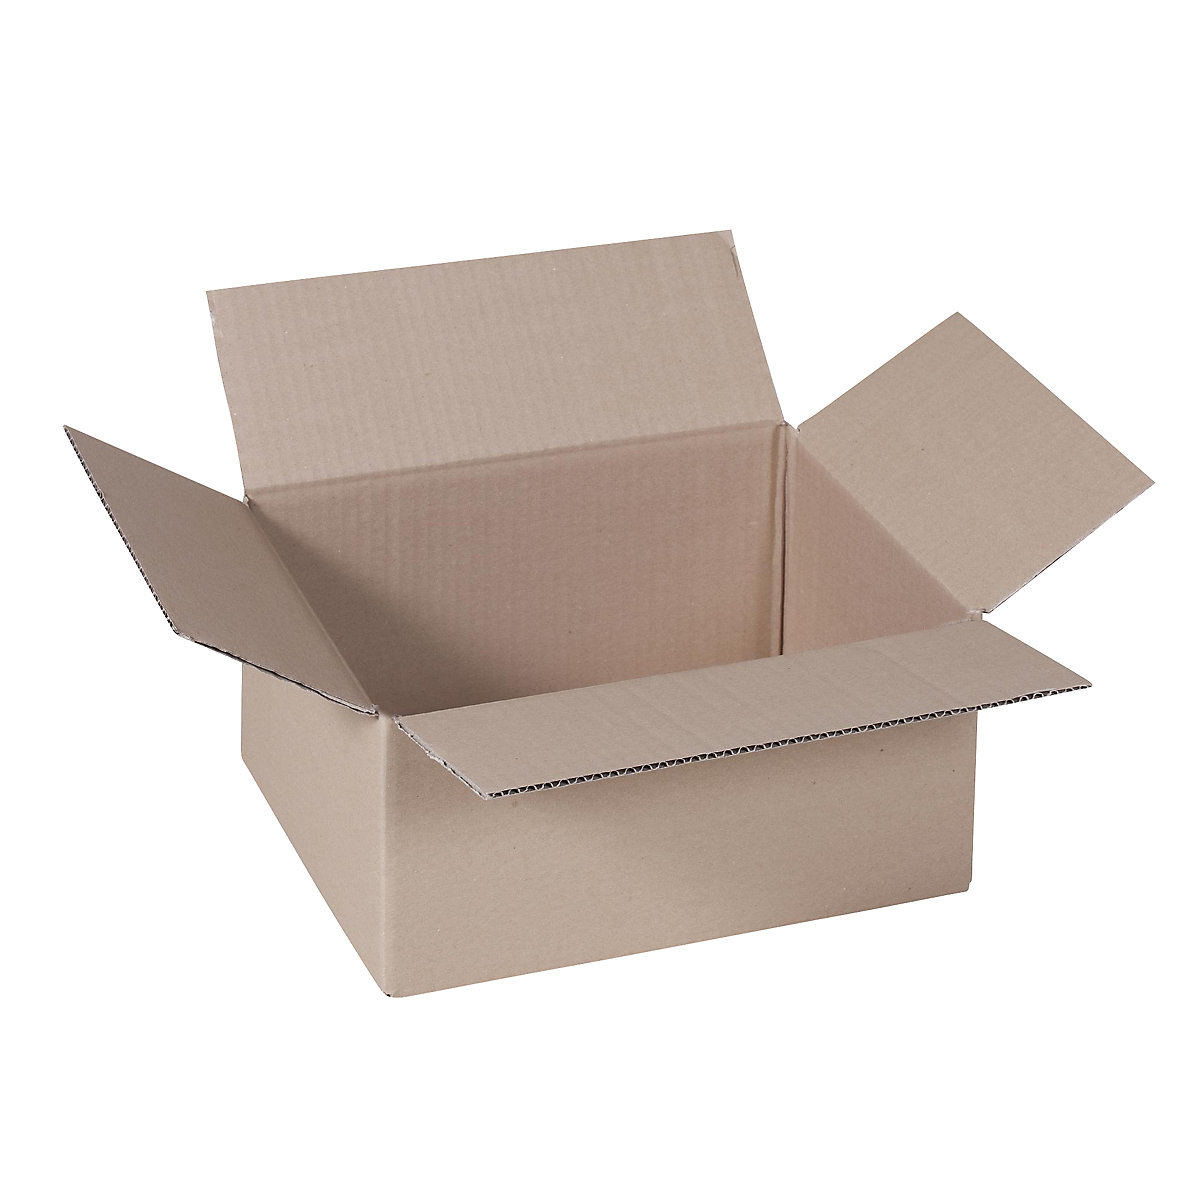 Folding cardboard box, FEFCO 0201, made of single fluted cardboard, internal dimensions 305 x 215 x 140 mm, pack of 50-4